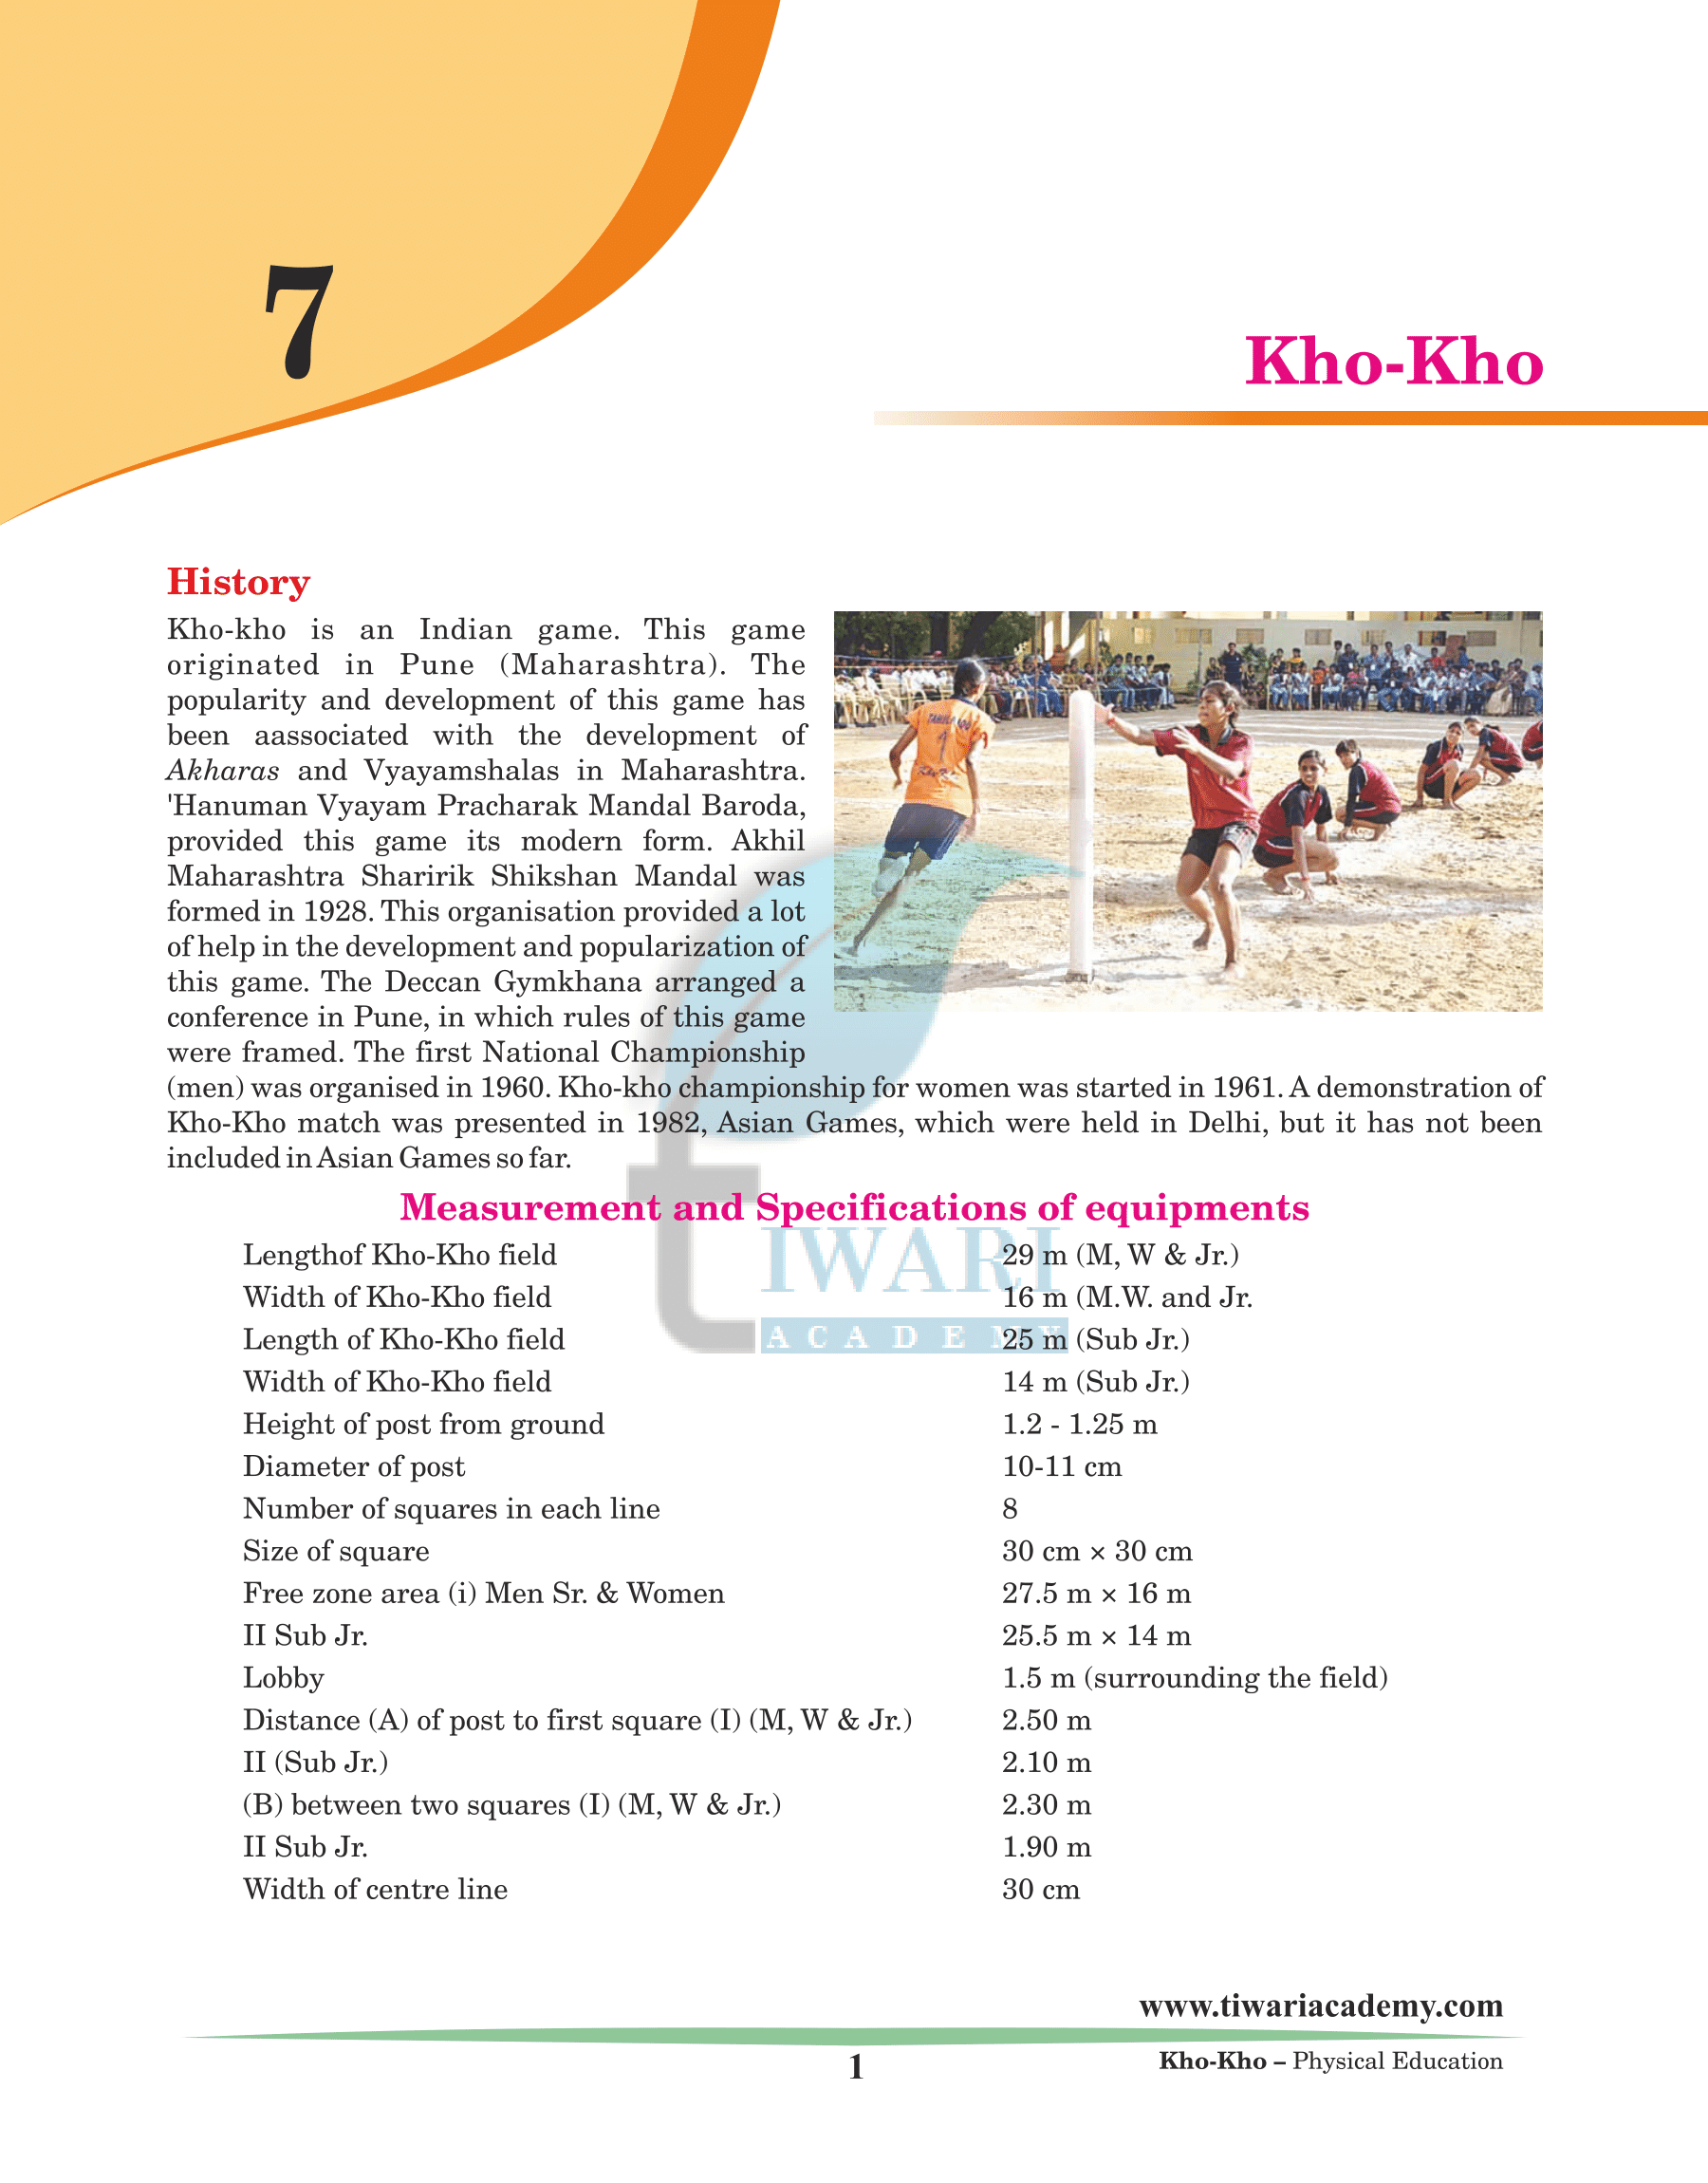 Kho-Kho Sports rules